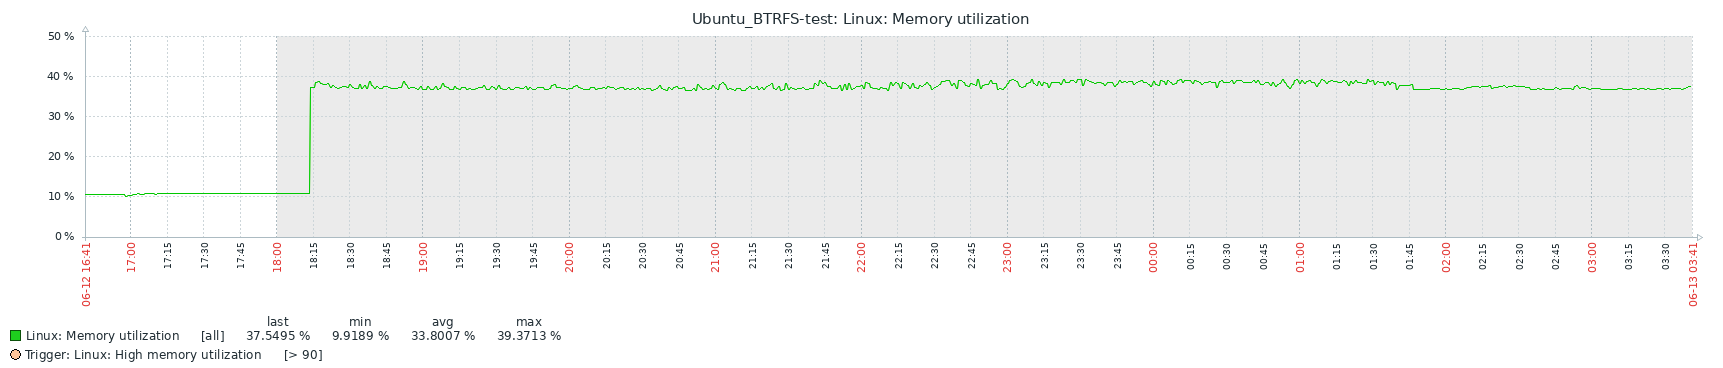 2.7.2 BTRFS Memory utilization full